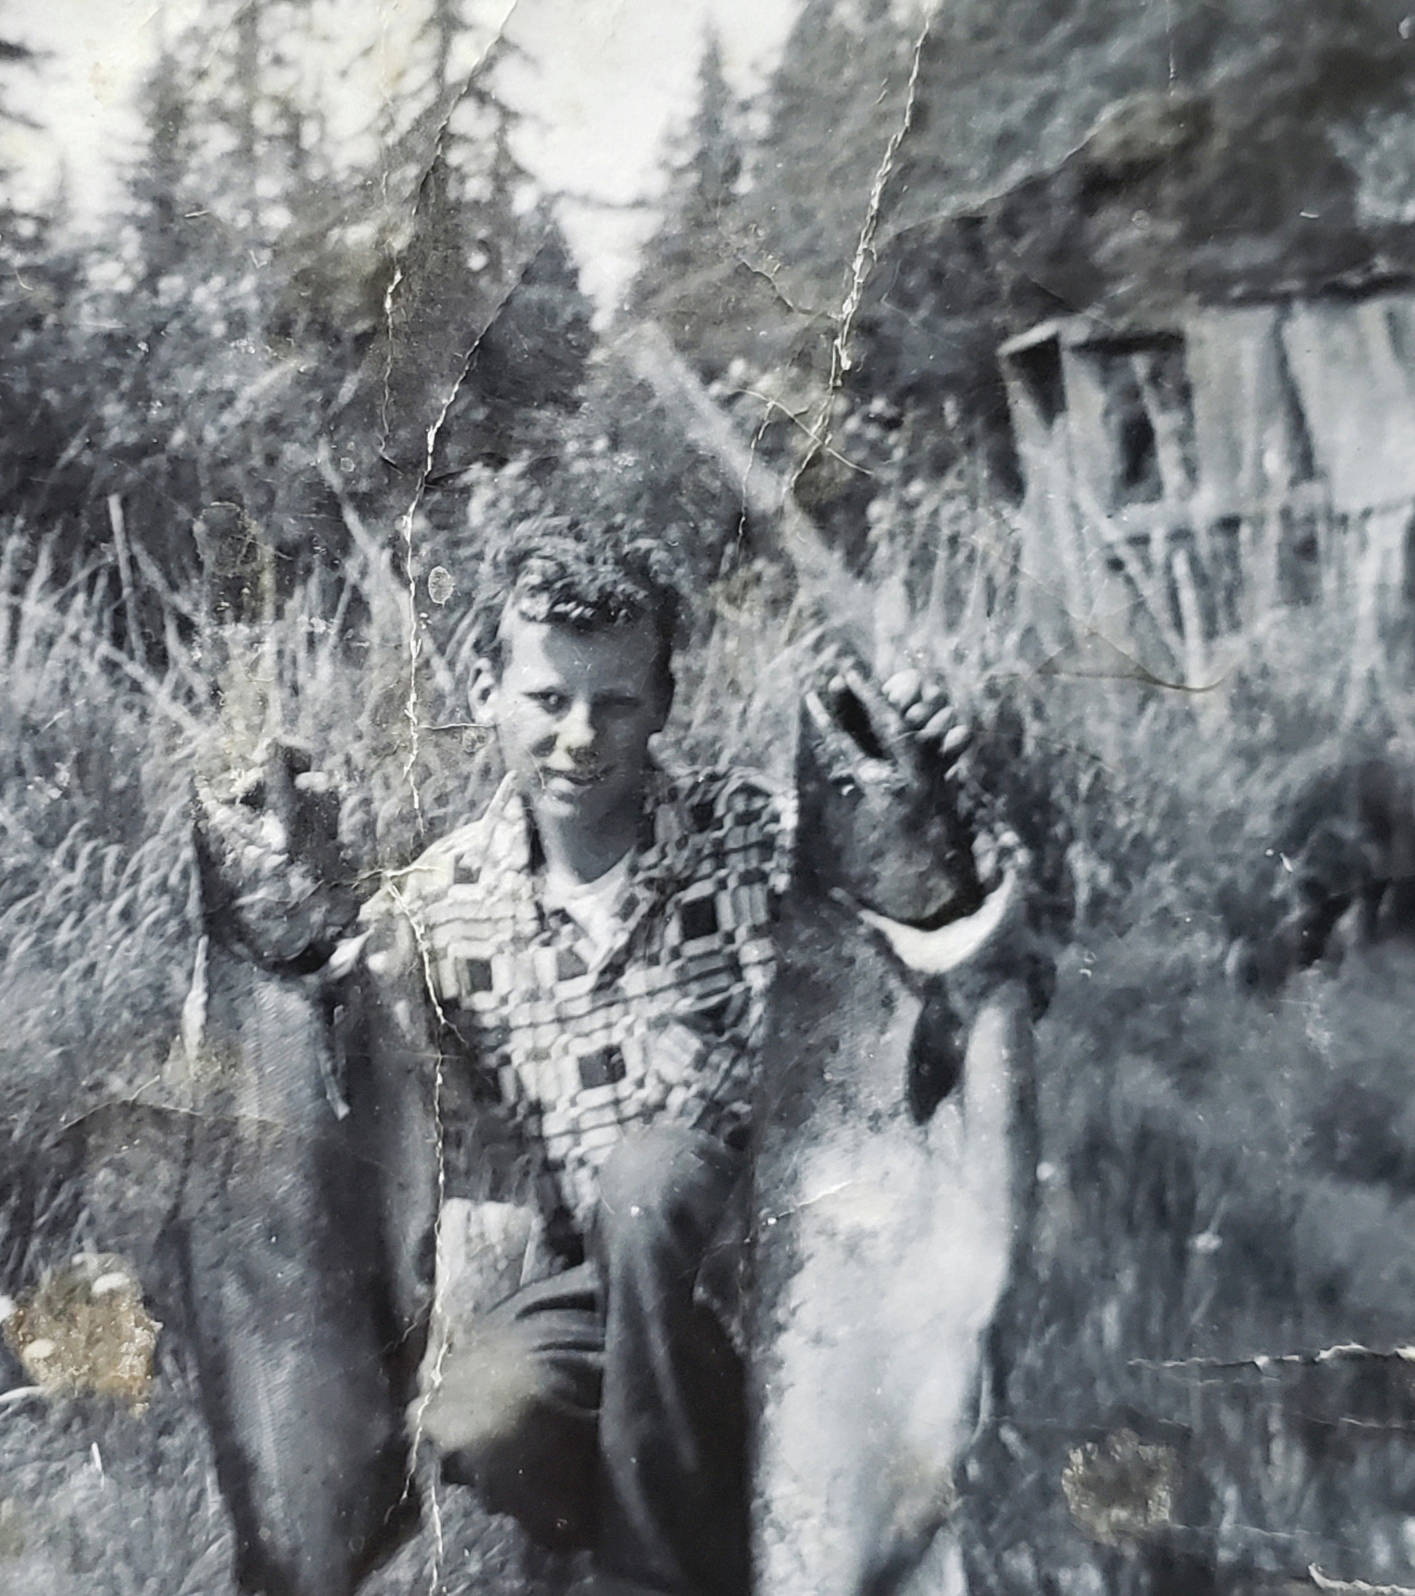 Steve Walli in 1960 with a king salmon from Stariski Creek, Alaska. (Photo courtesy Steve Walli family)